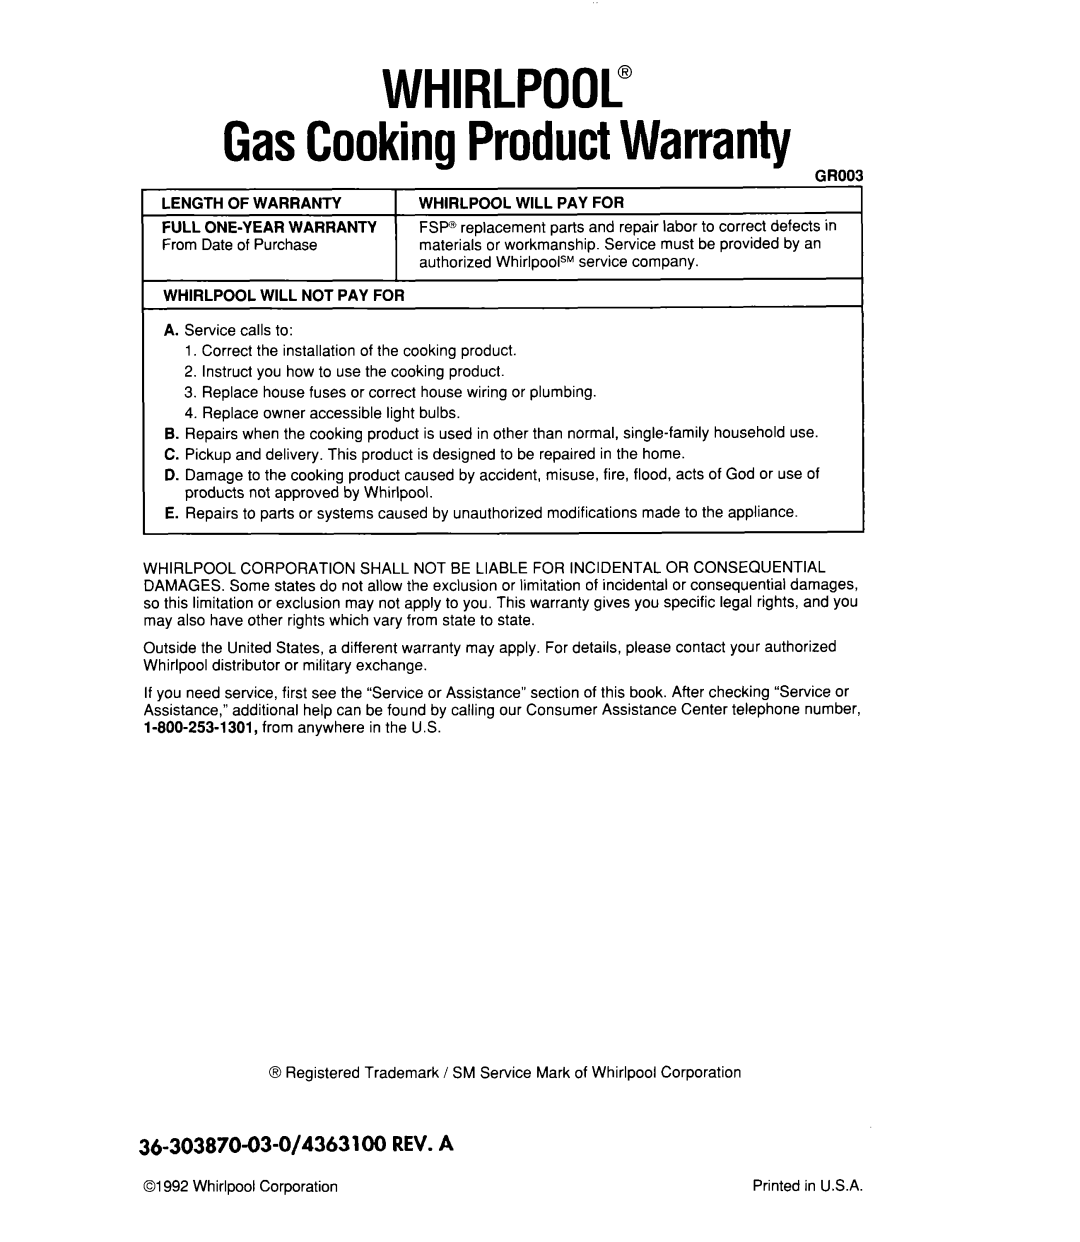 Whirlpool SC8900EX manual WHIRLPOOL” GasCookingProductWarranty, 36-303870-03-O/4363100 REV. A 